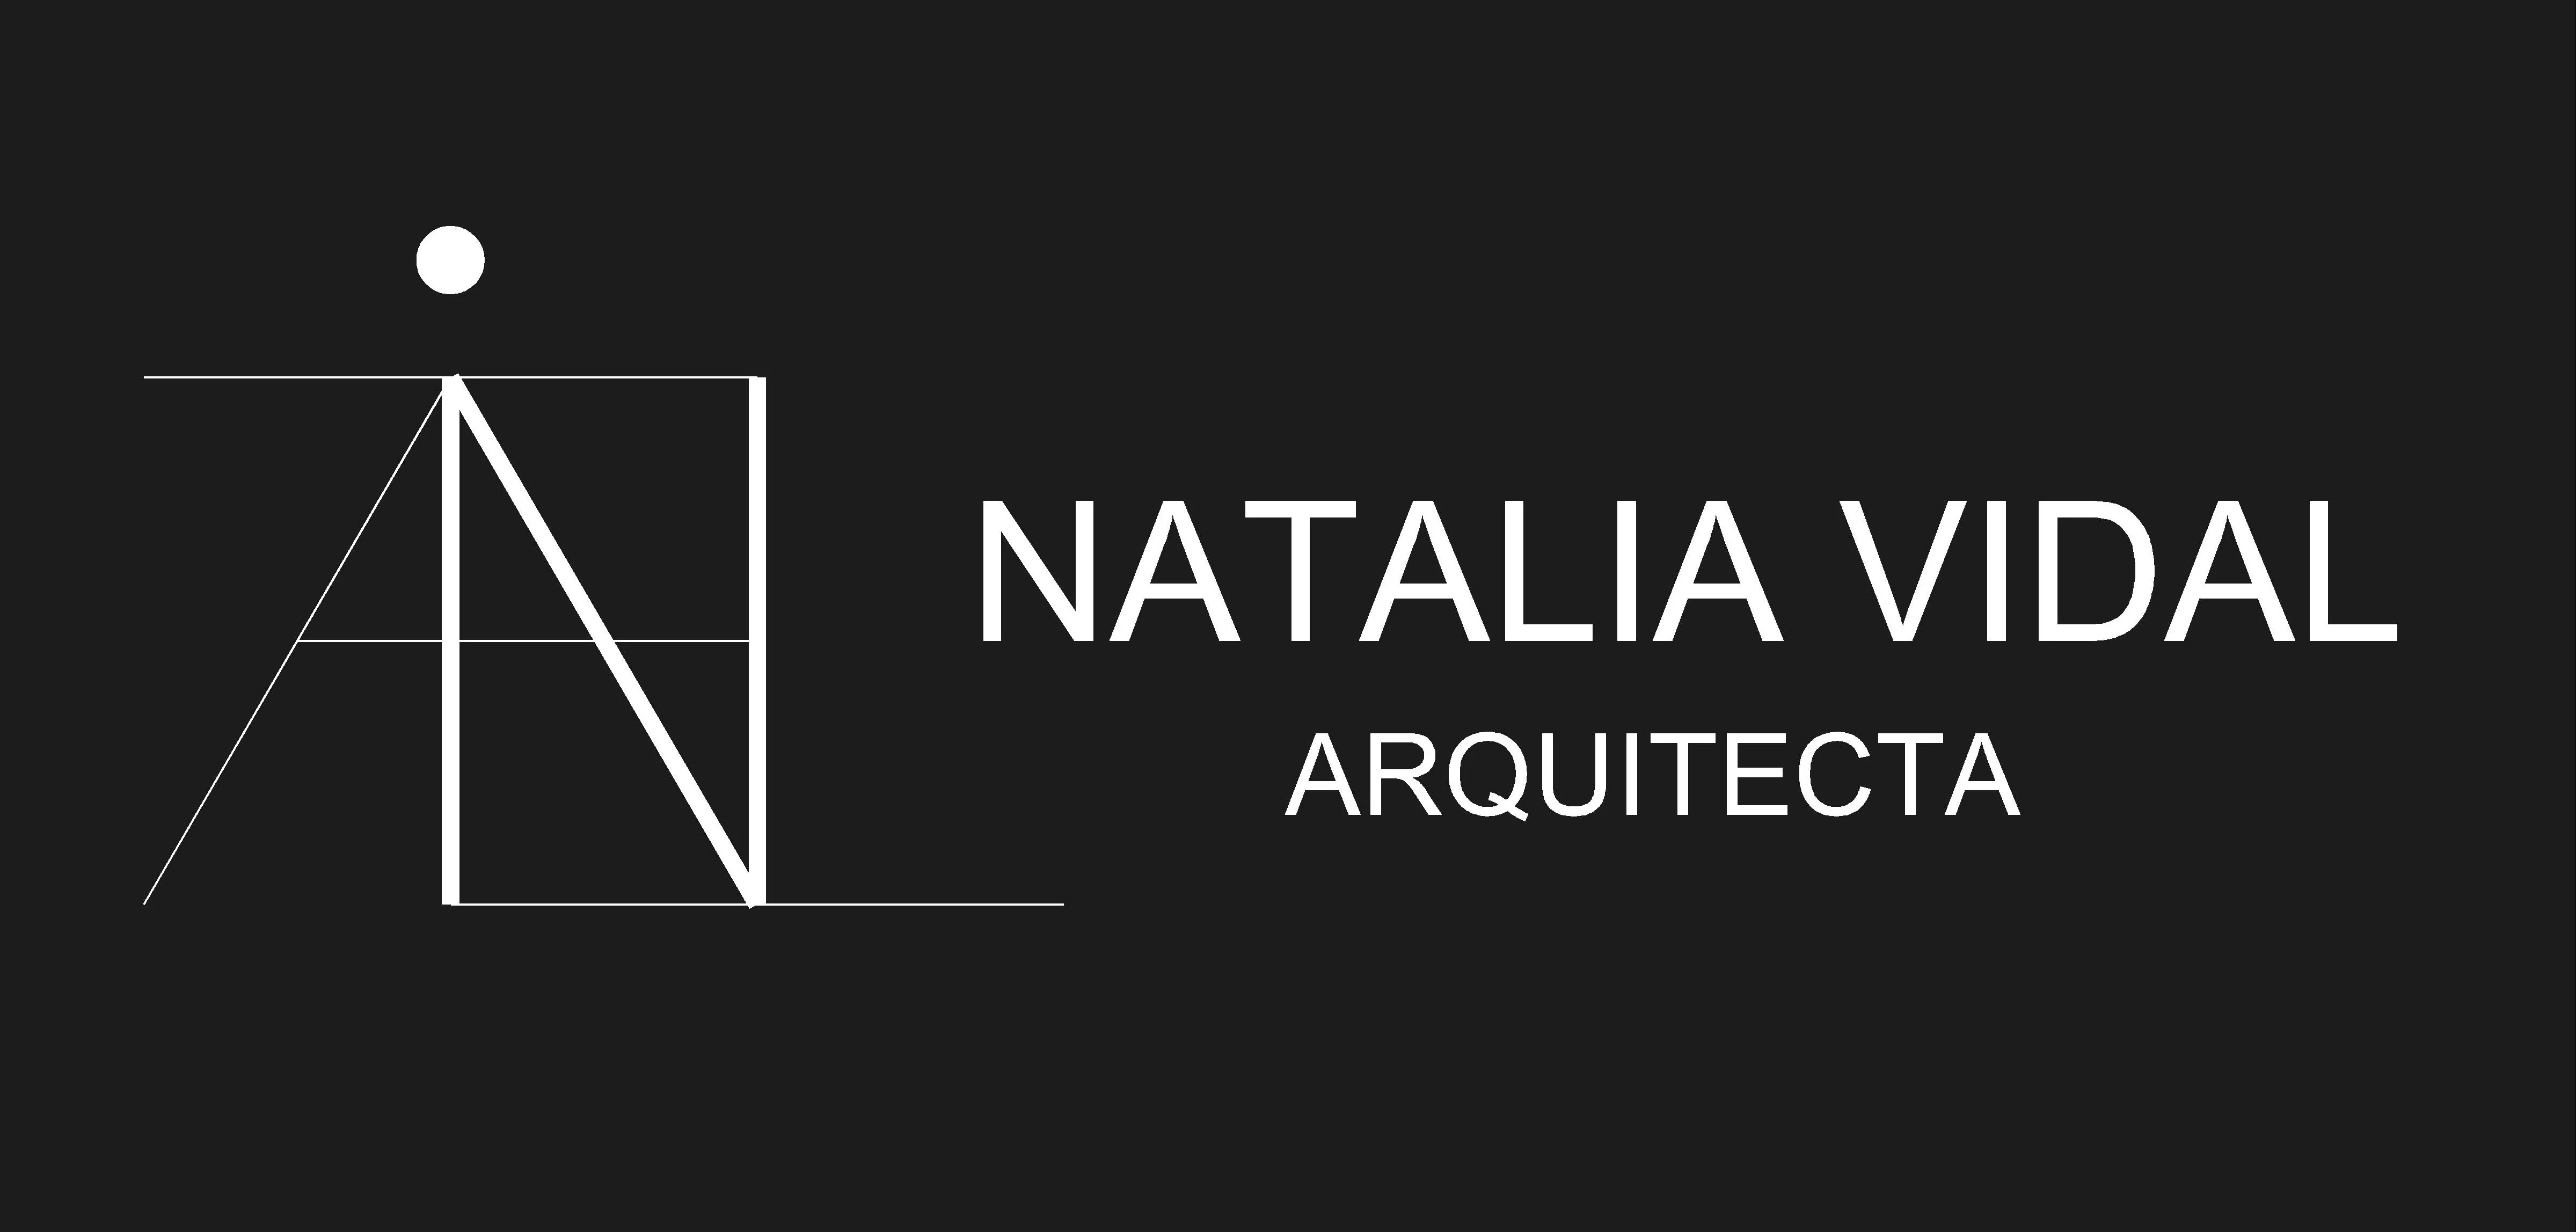 Natalia Vidal Arquitecta